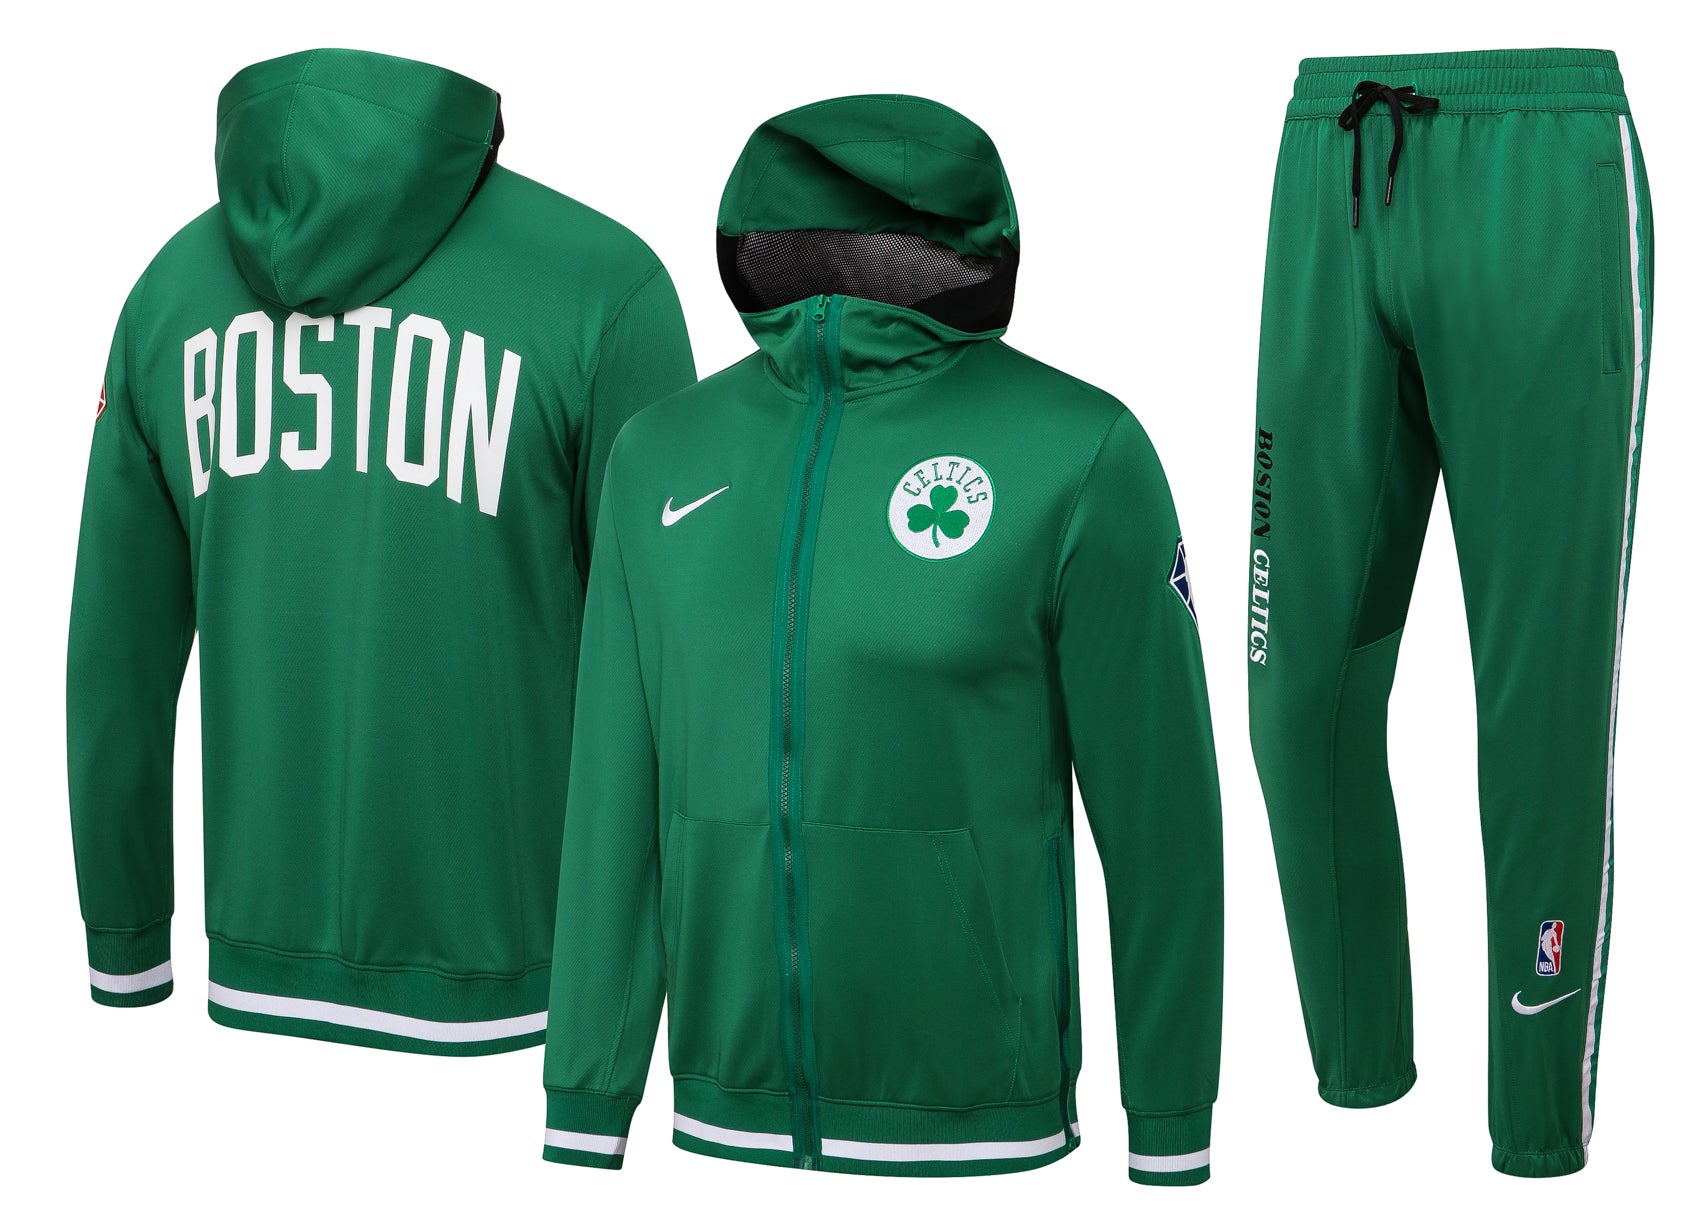 Boston green suit